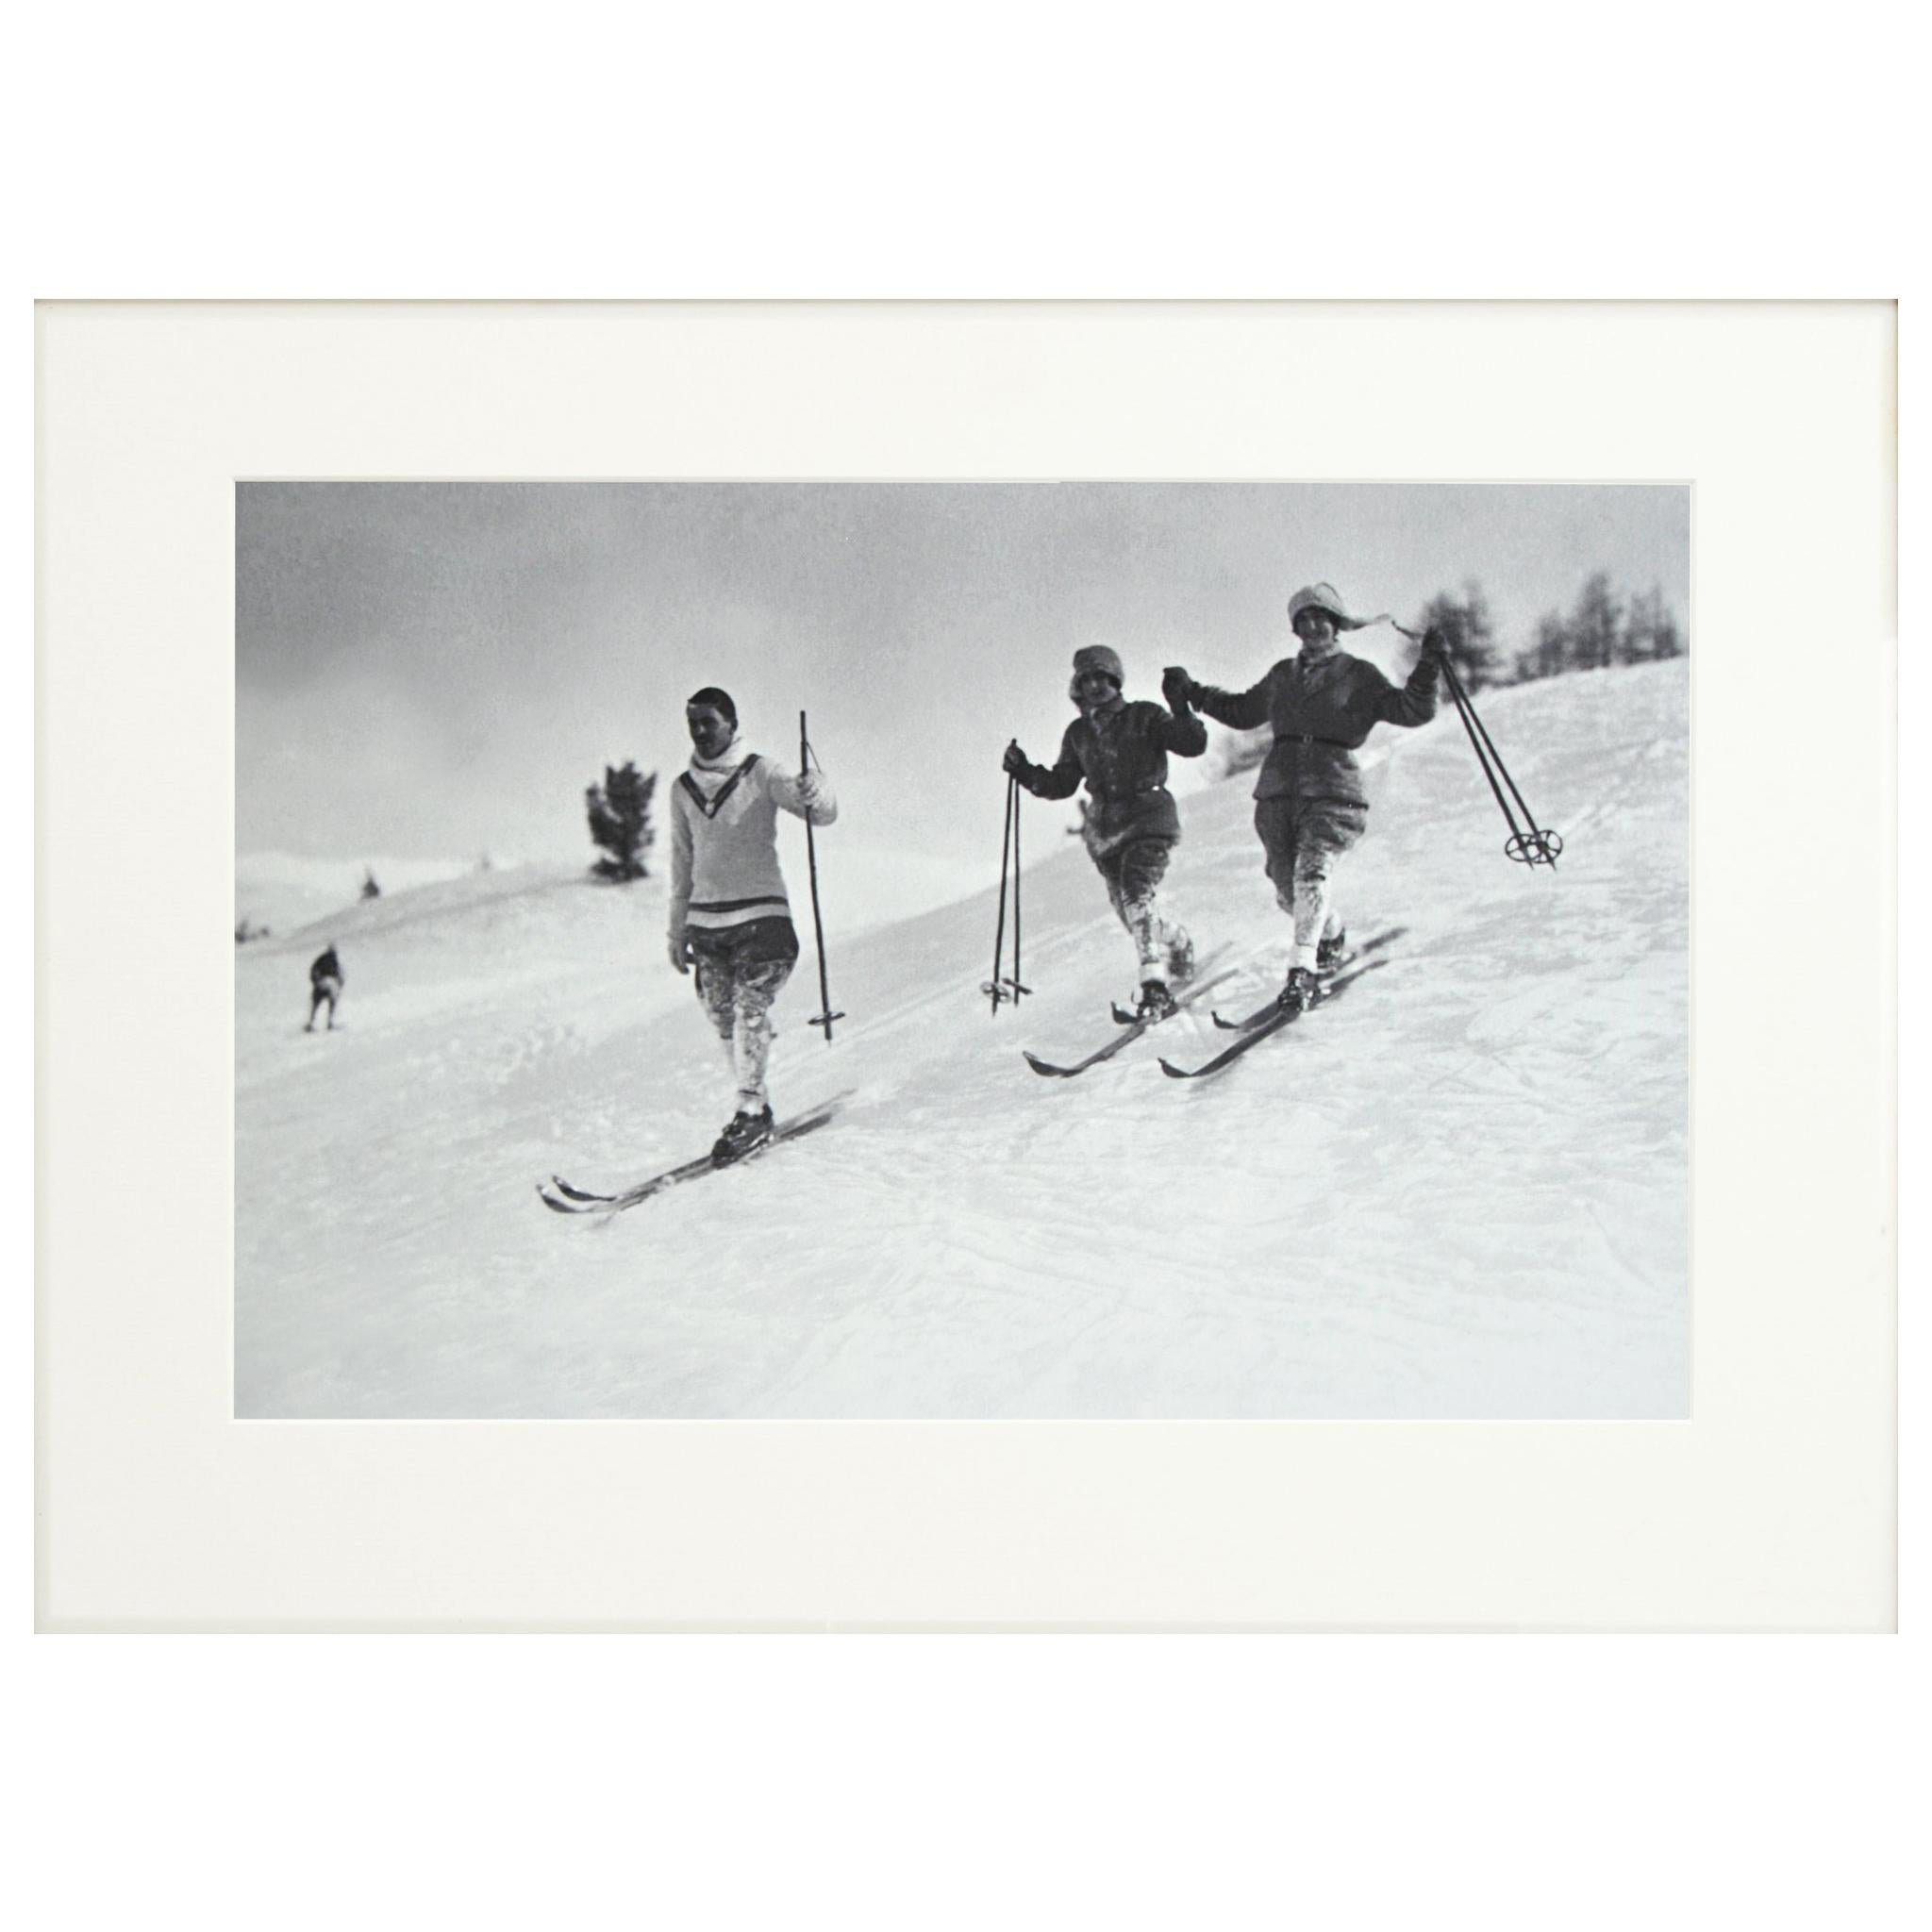 Alpine Ski Photograph, 'St. Moritz' Taken from Original 1930s Photograph